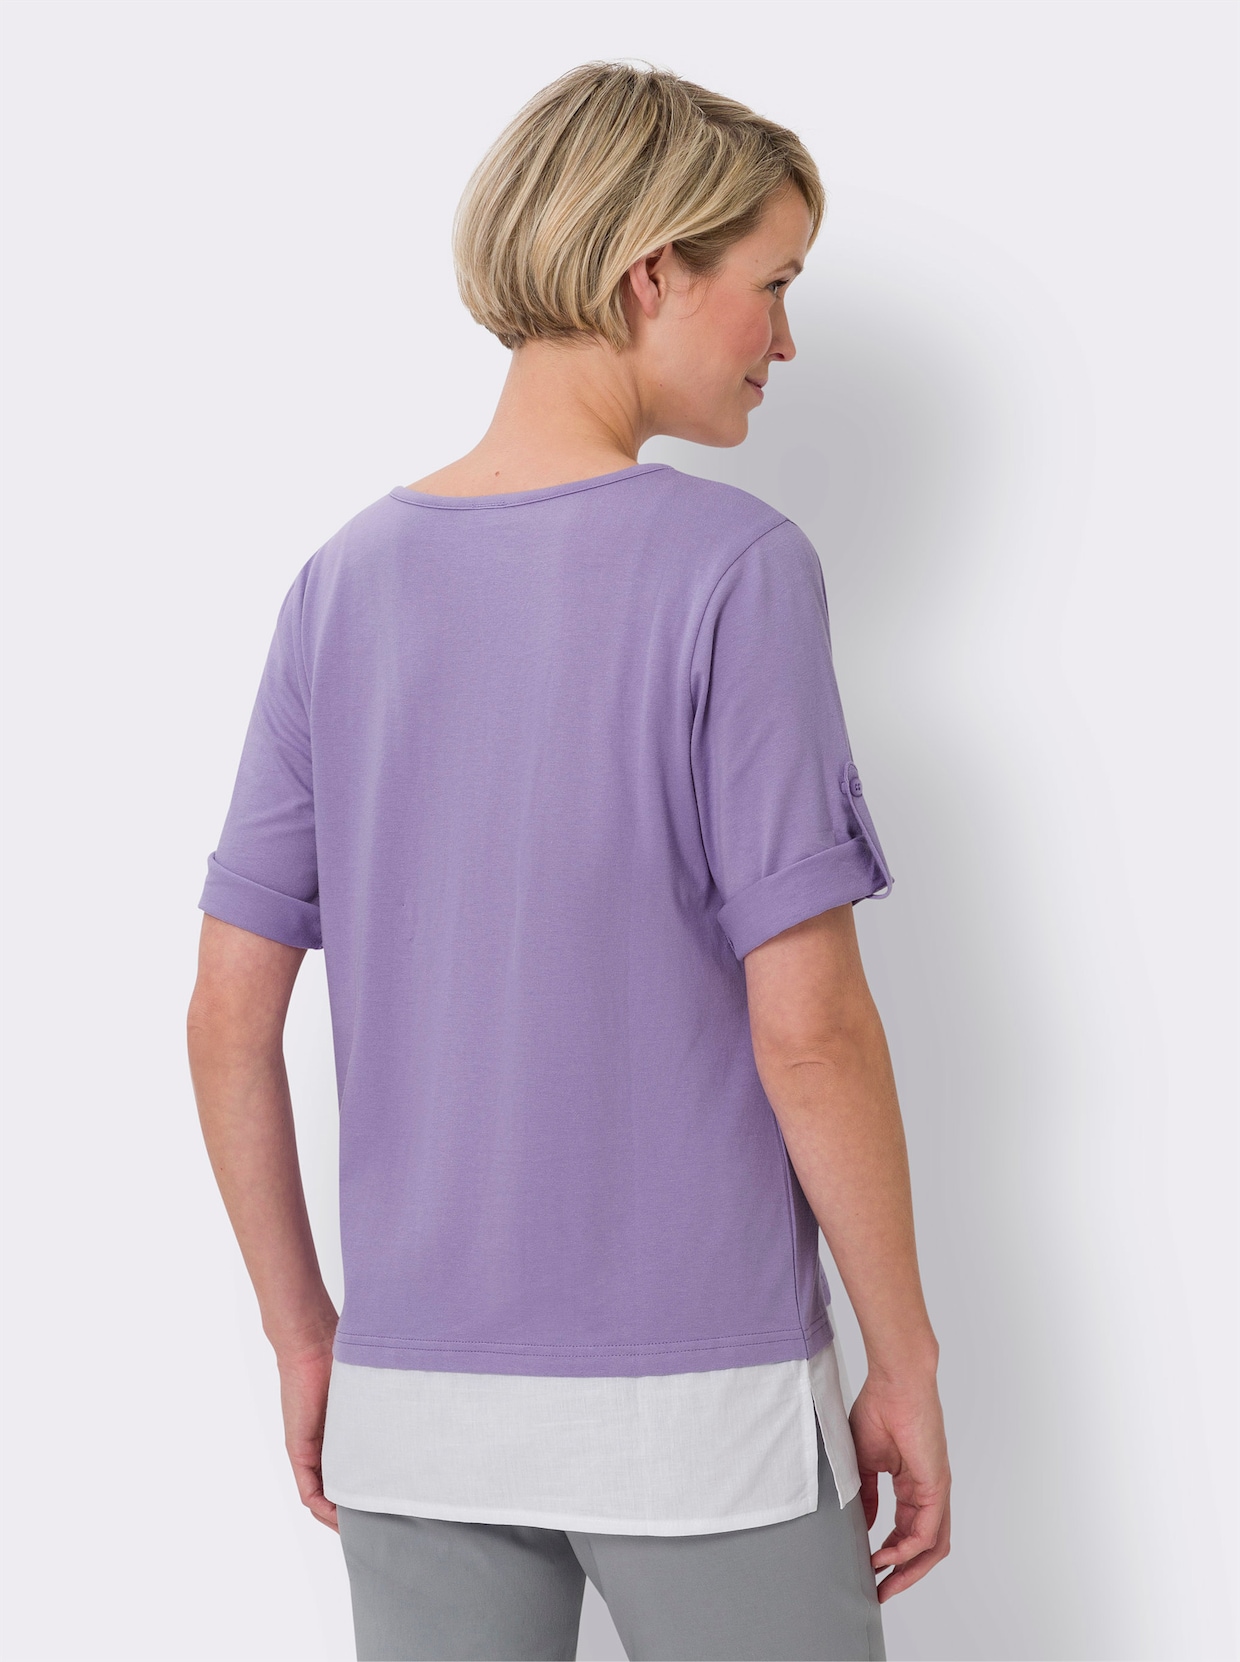 2-in-1-shirt - lavendel/wit